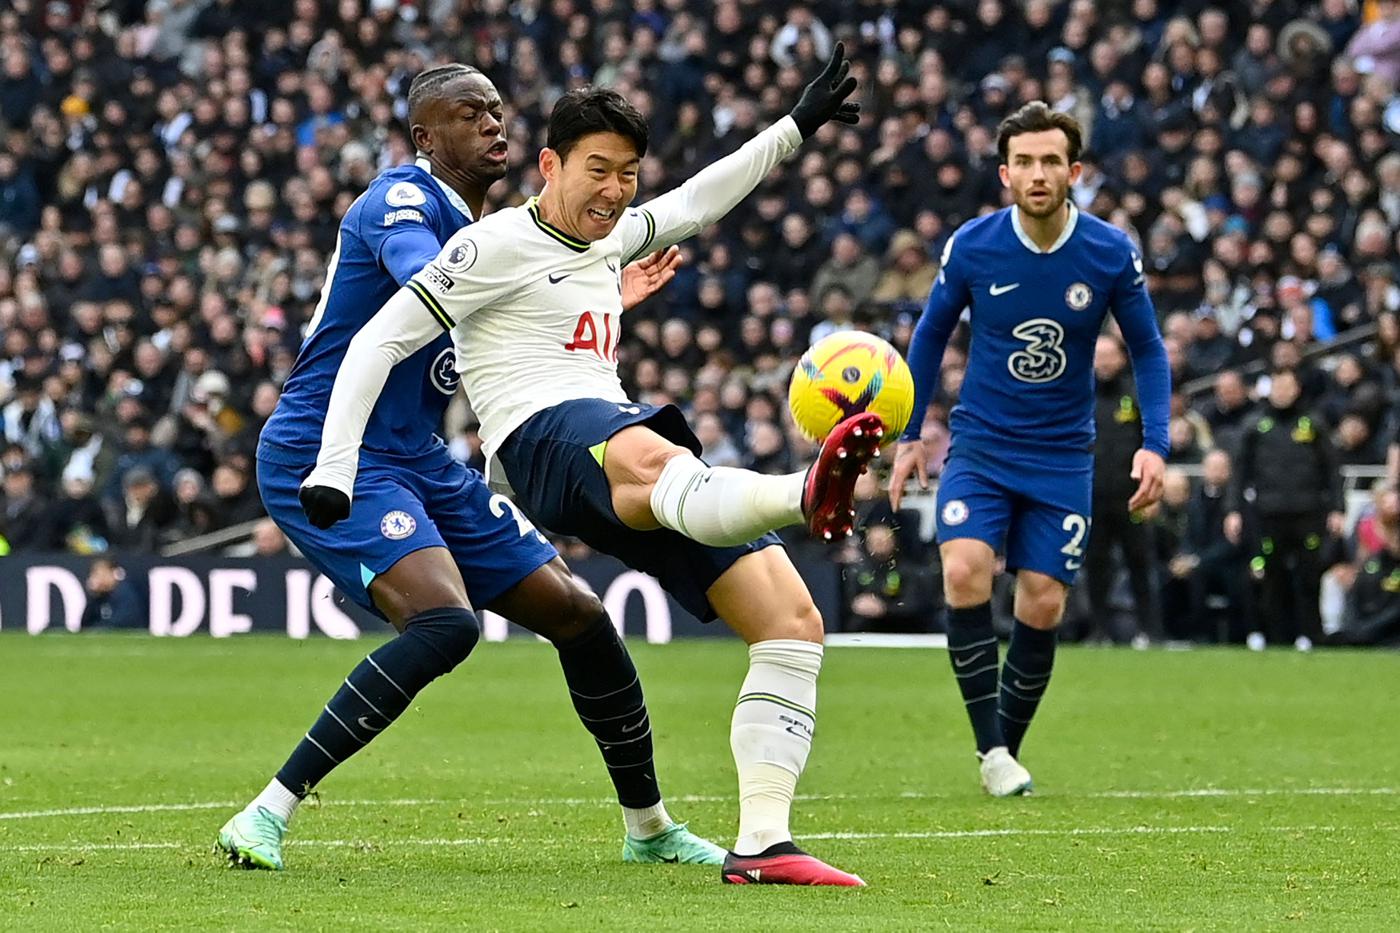 Tottenham vs Chelsea - 2-0. English Premier League, 25th round. Match Review, Statistics